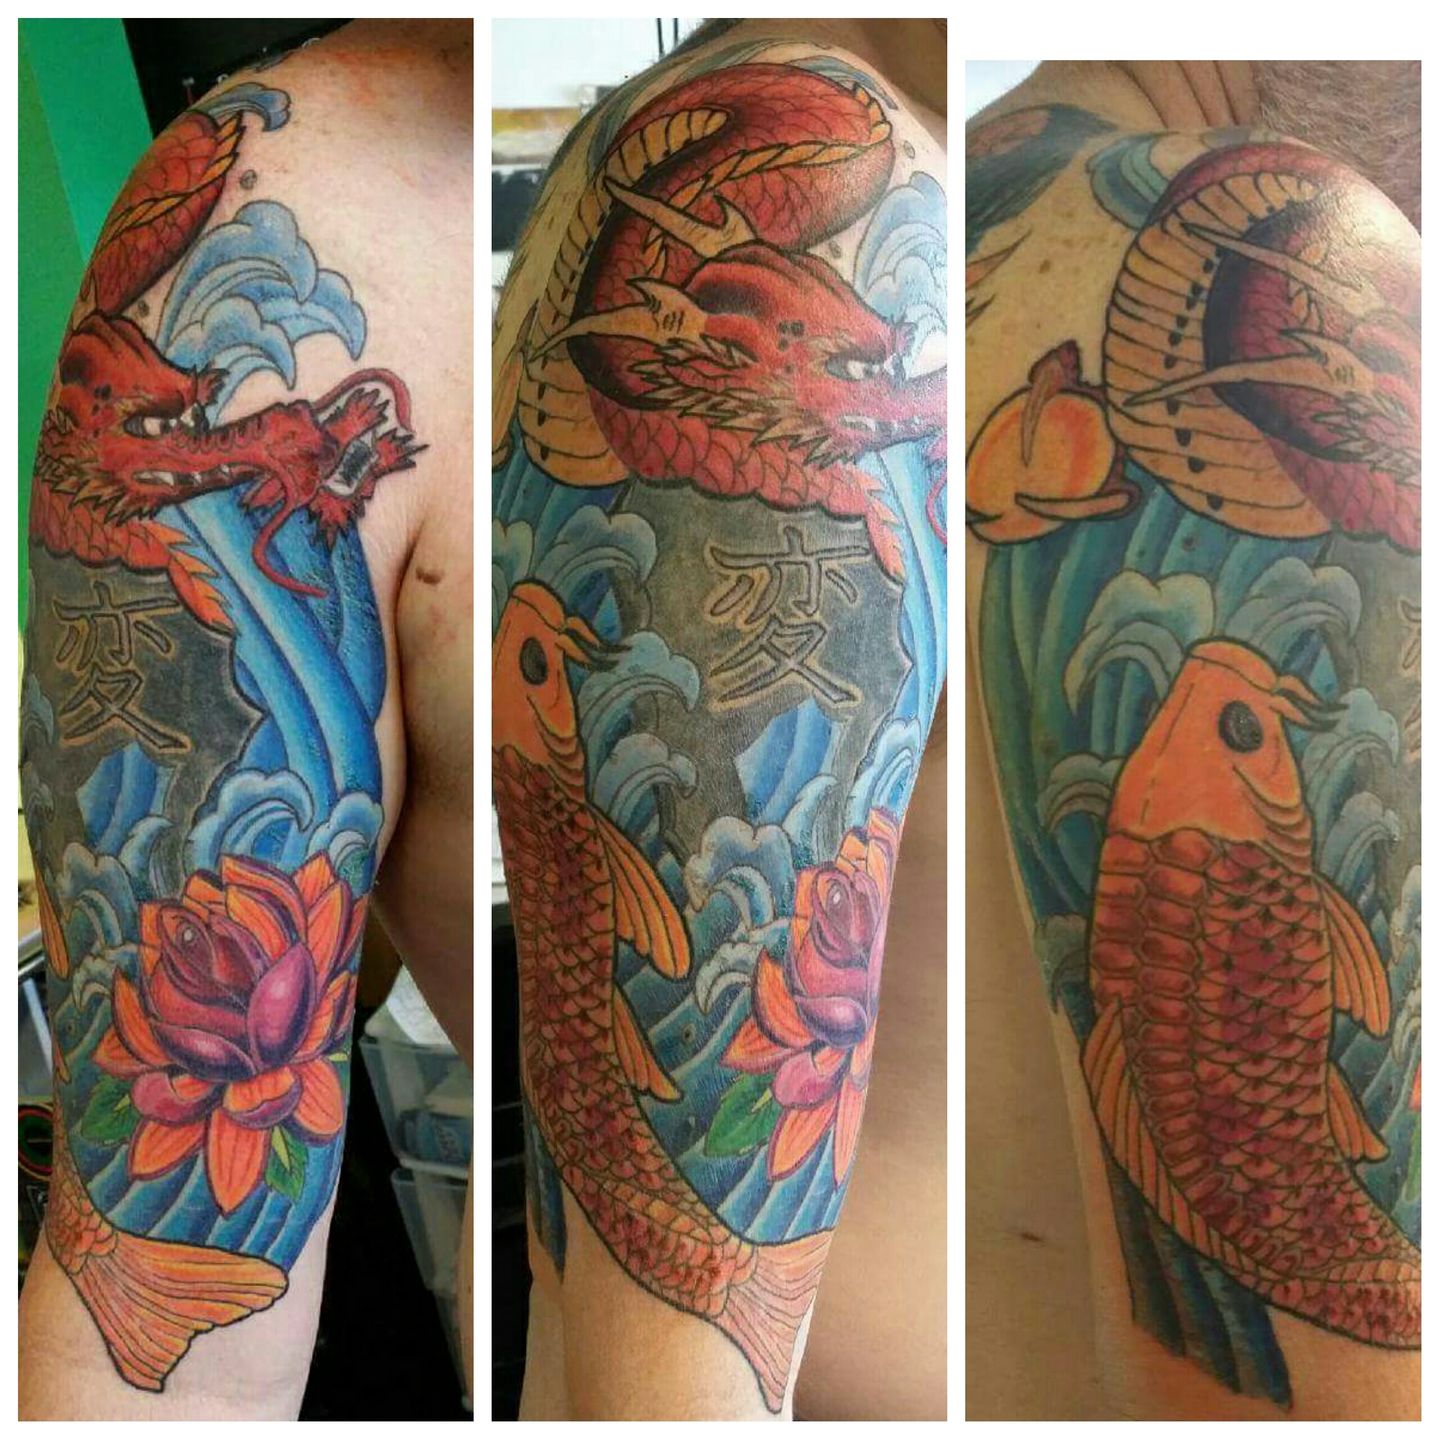 Water Dragon Tattoo design by ChipTooth on DeviantArt